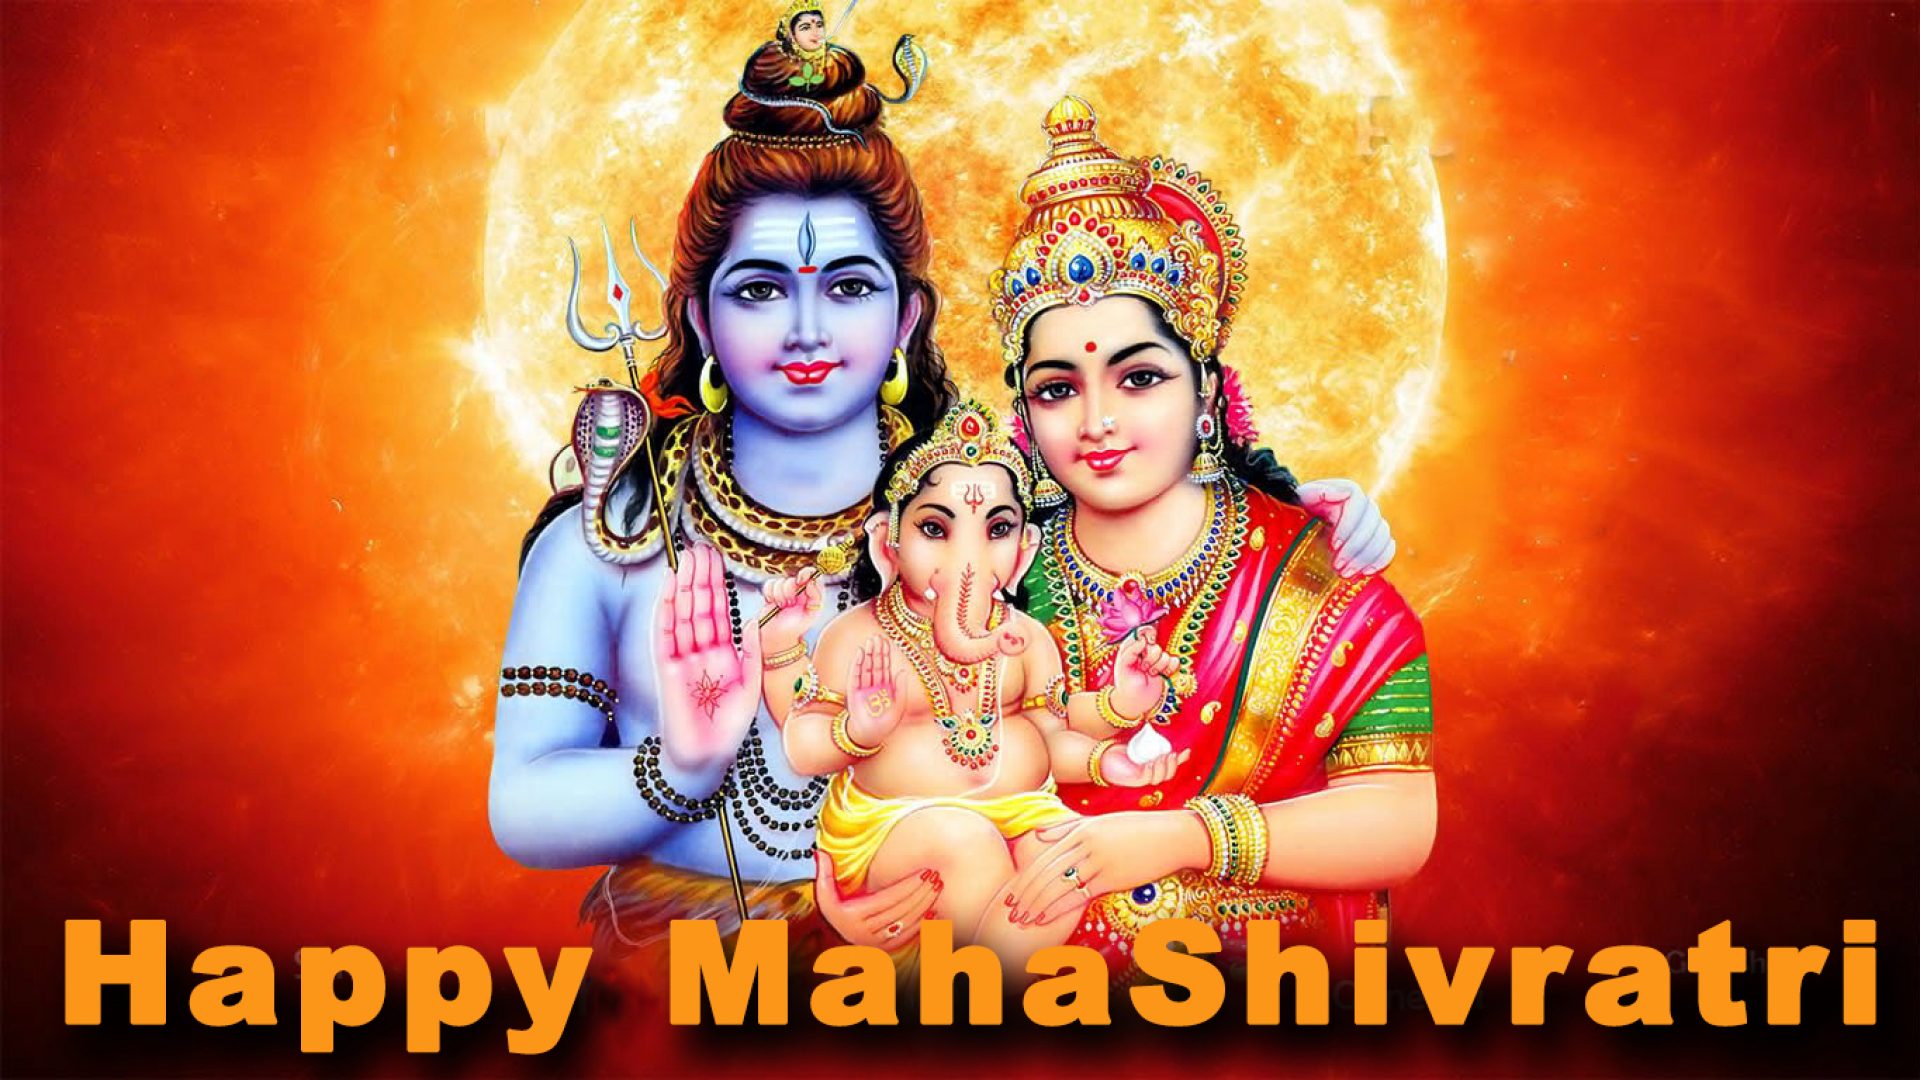 Happy Mahashivratri Images and HD Wallpapers For Free Download | Mahashivratri  images, Good morning images, Shivratri photo